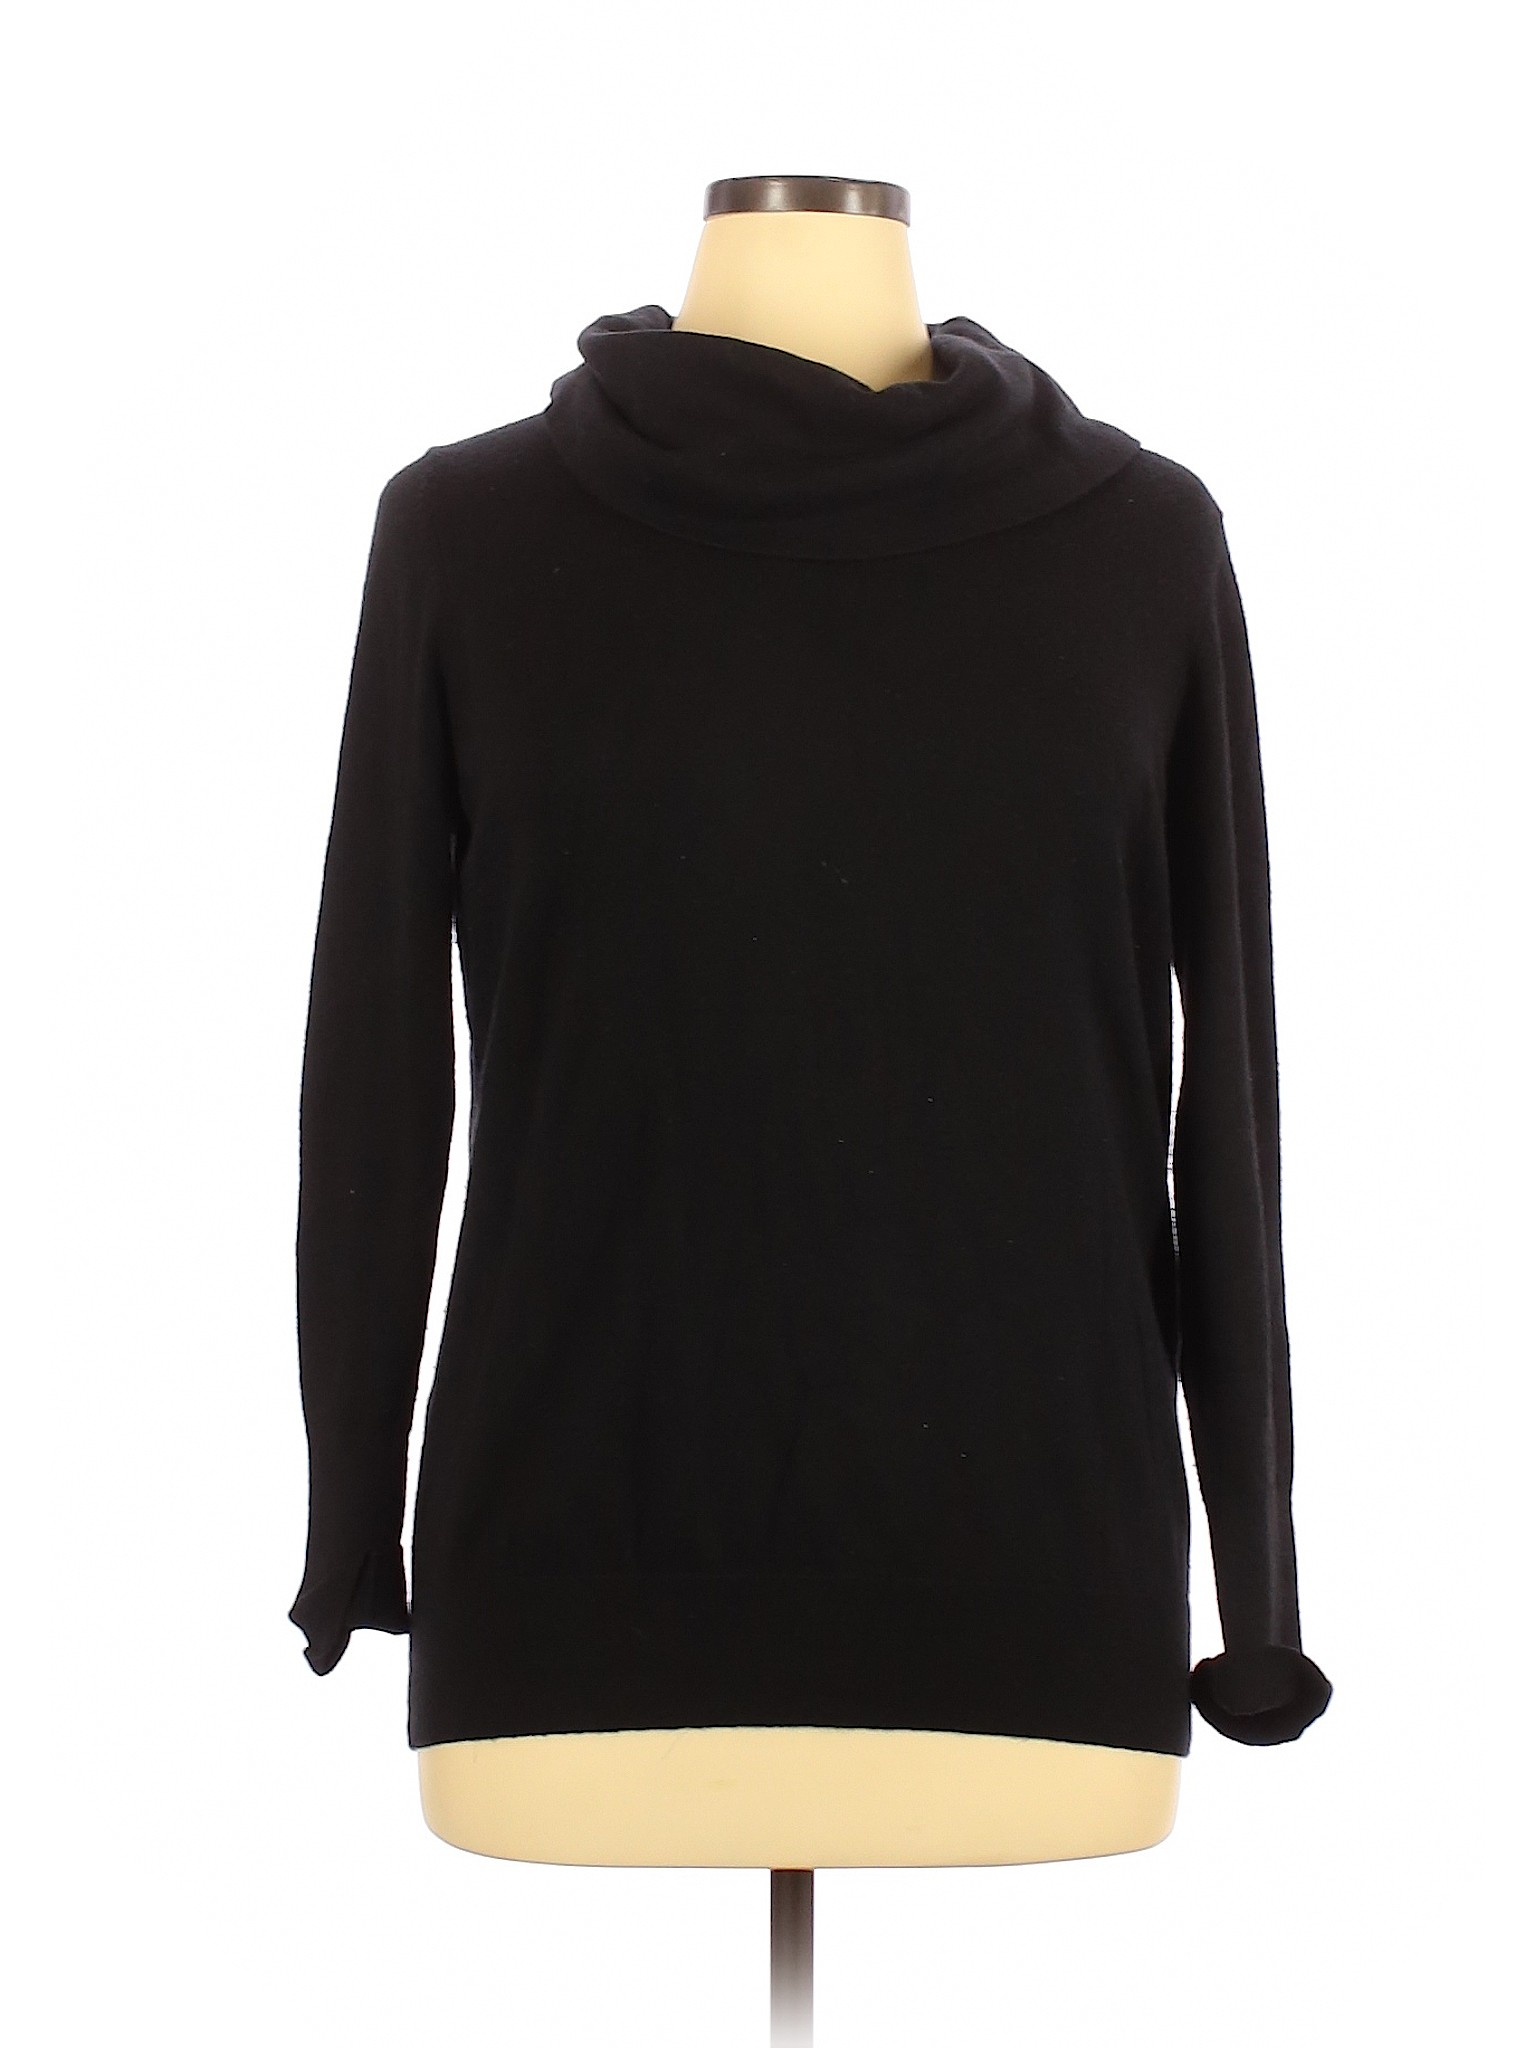 Chico's Women Black Turtleneck Sweater XL | eBay